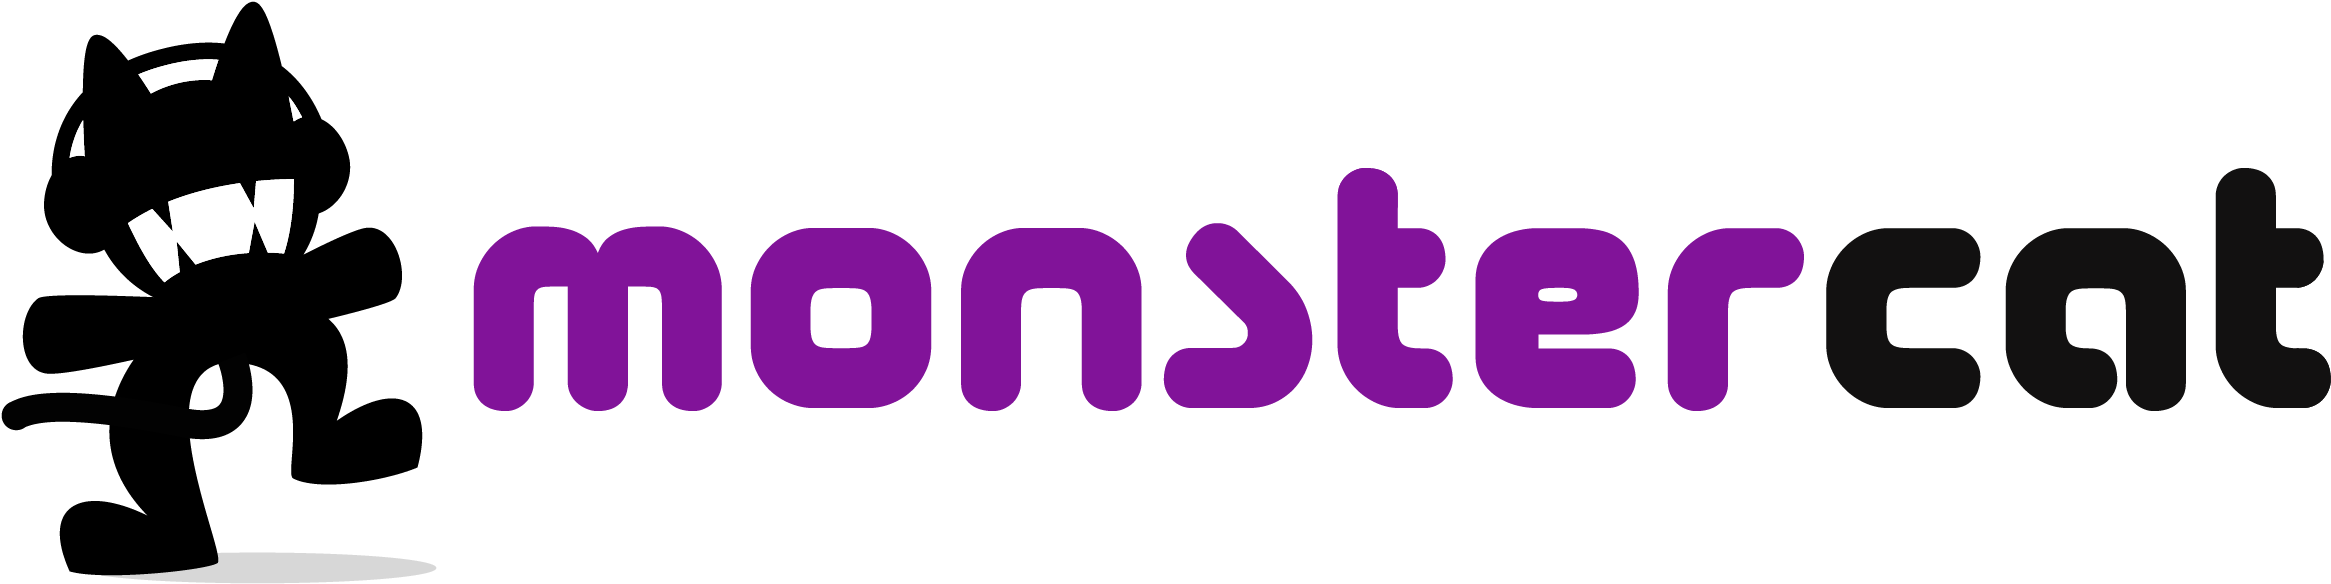 Monstercat-logo - Electro House Logo Png (2550x860), Png Download